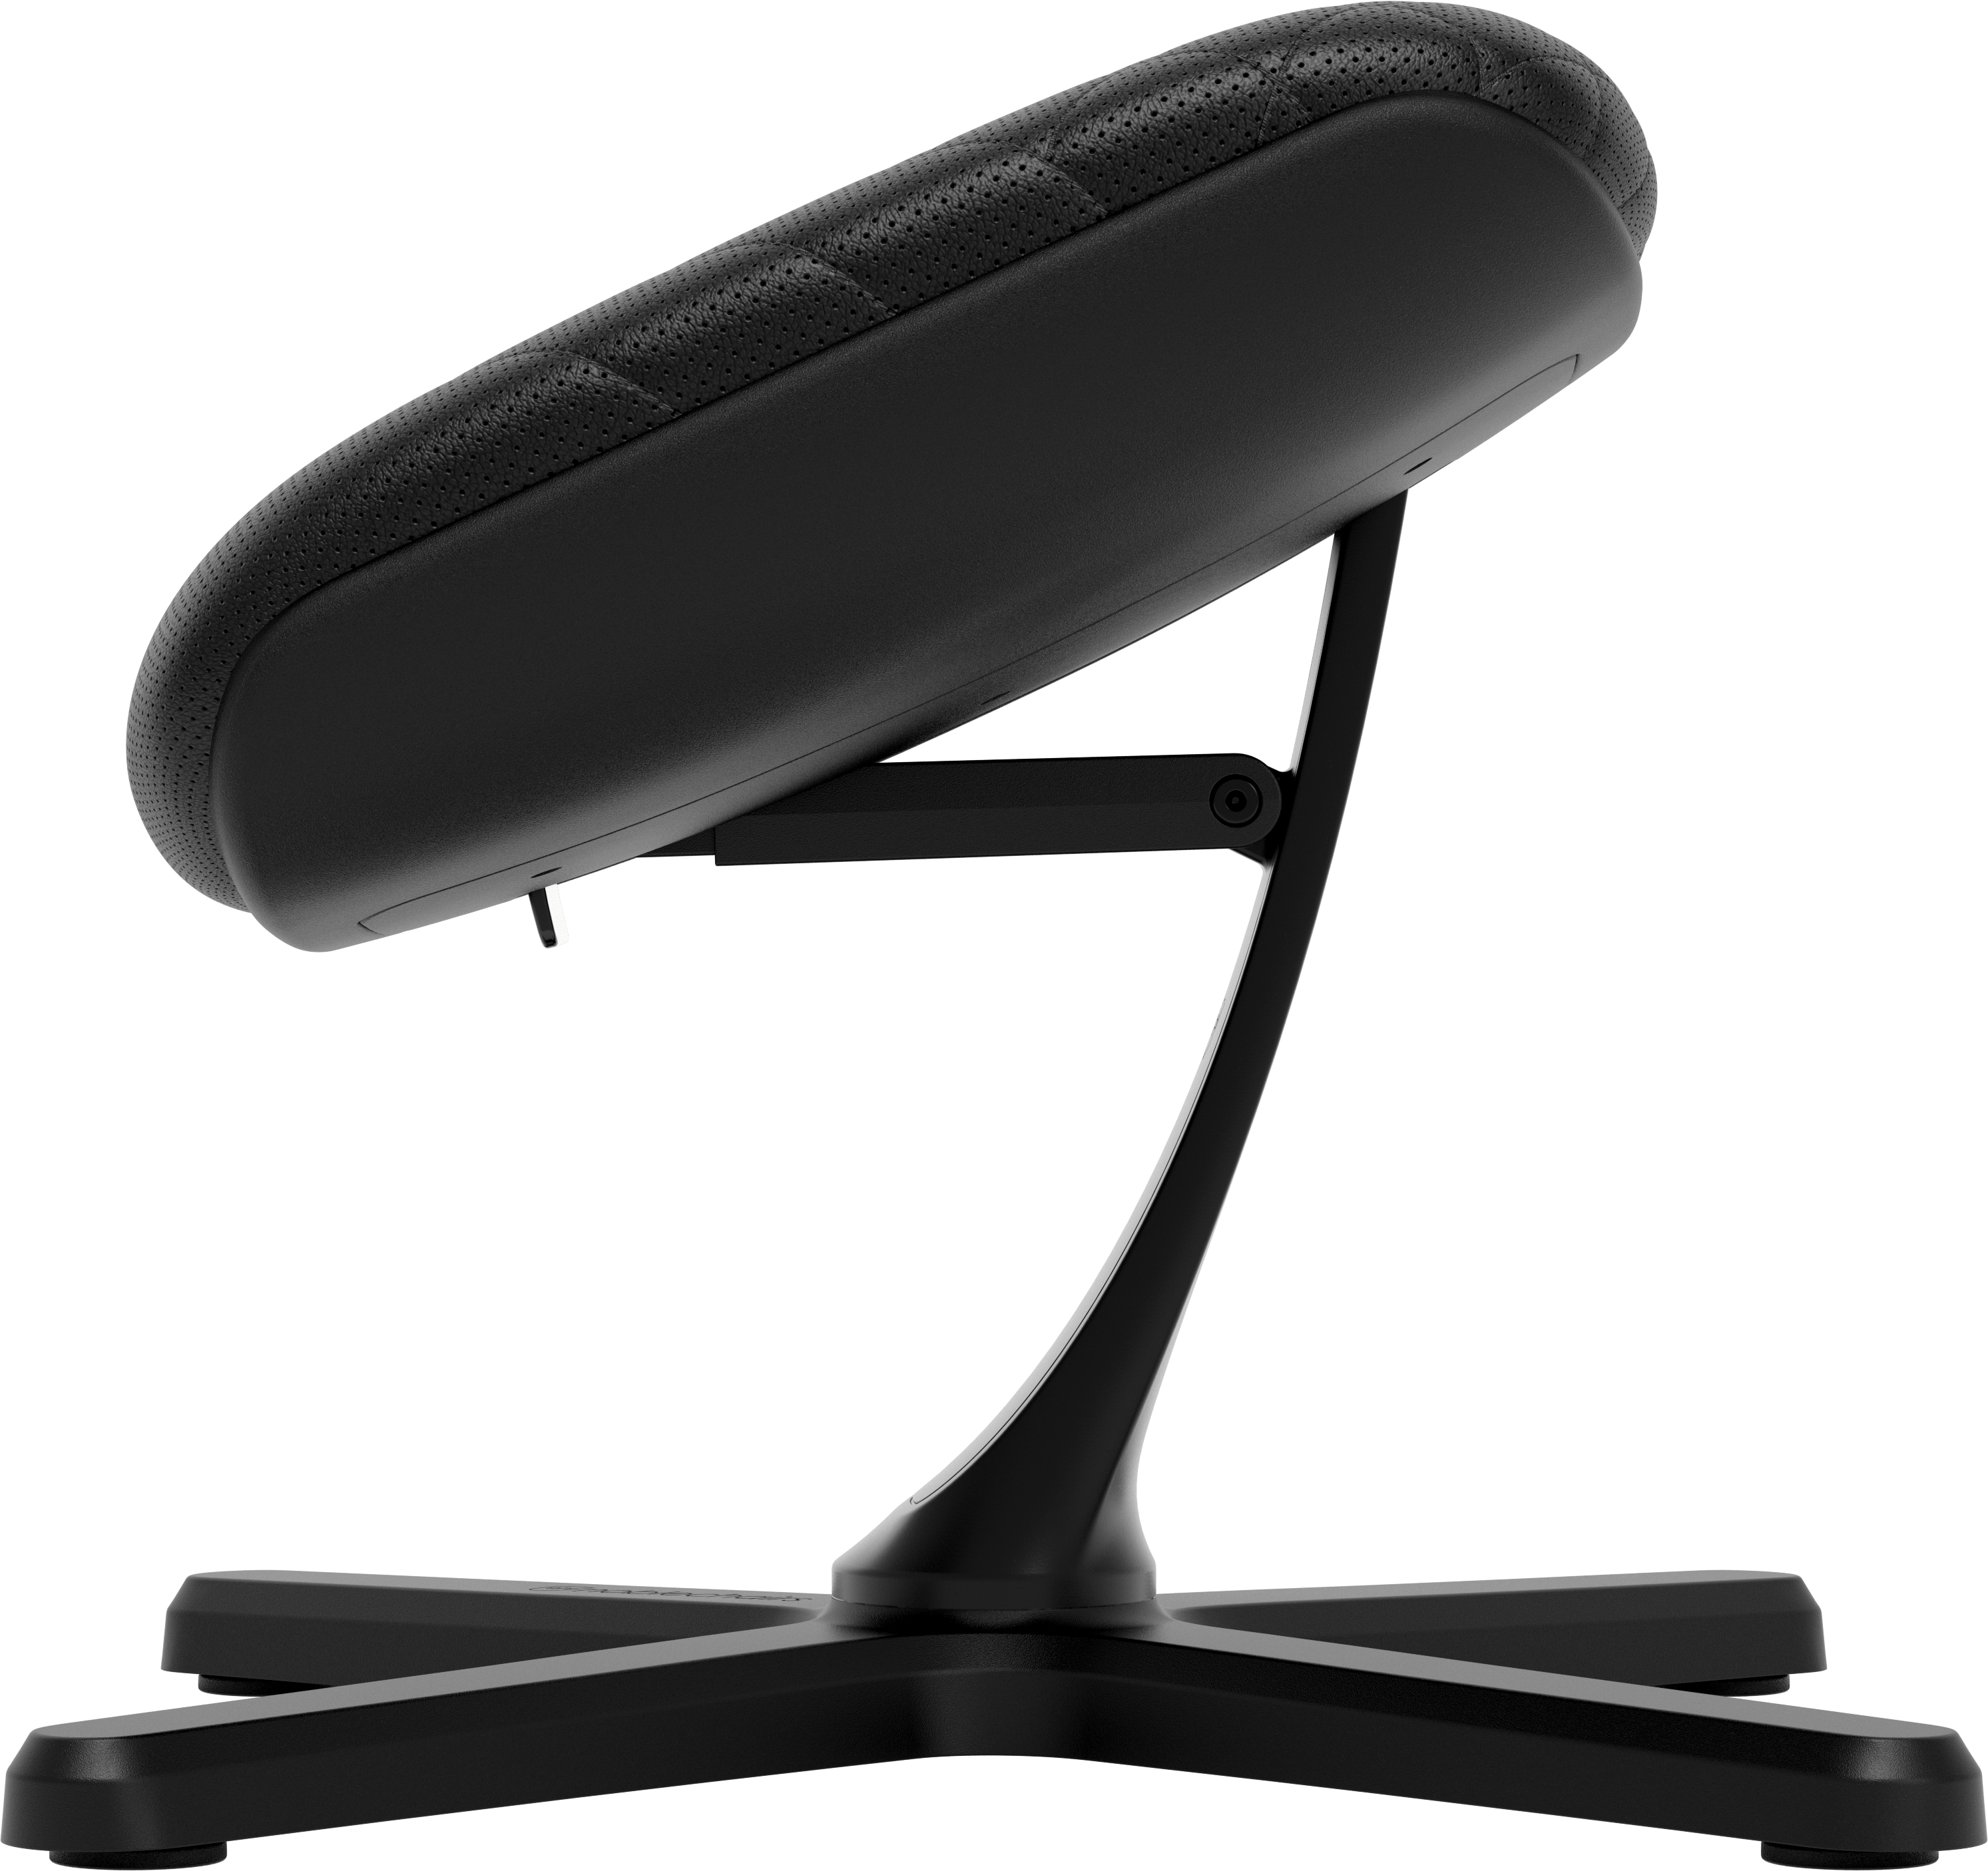 noblechairs Footrest 2 - Black adjustable features